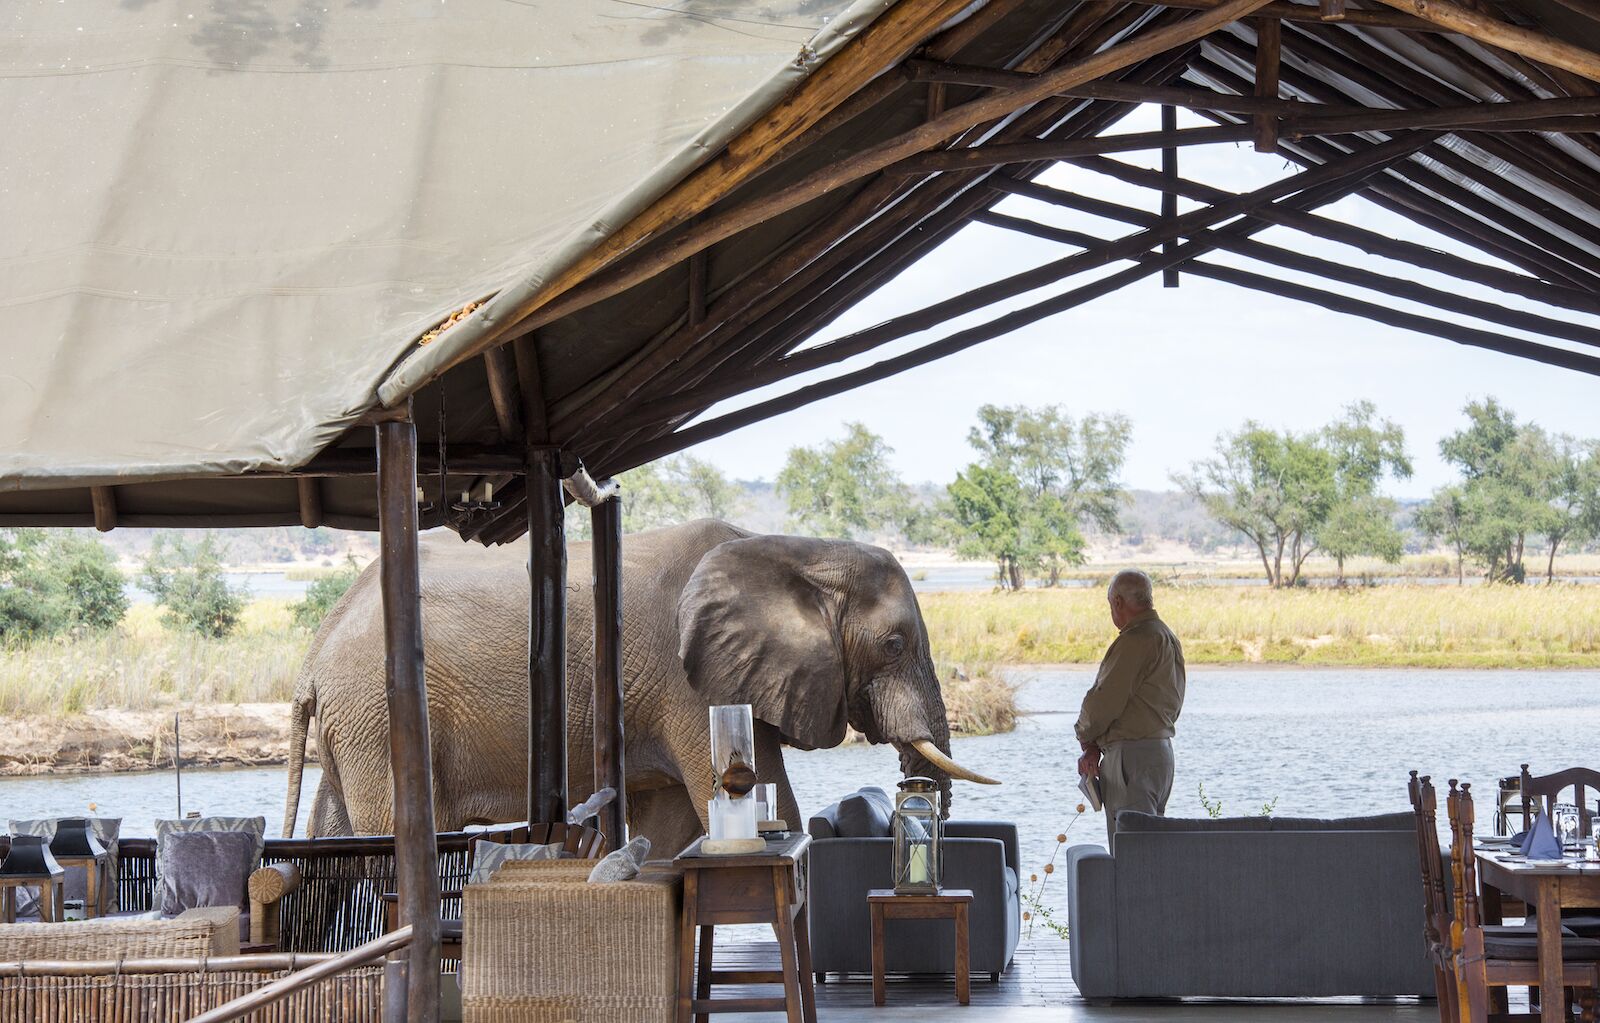 The Best Wildlife Hotels To See Local Wild Animals Around the World